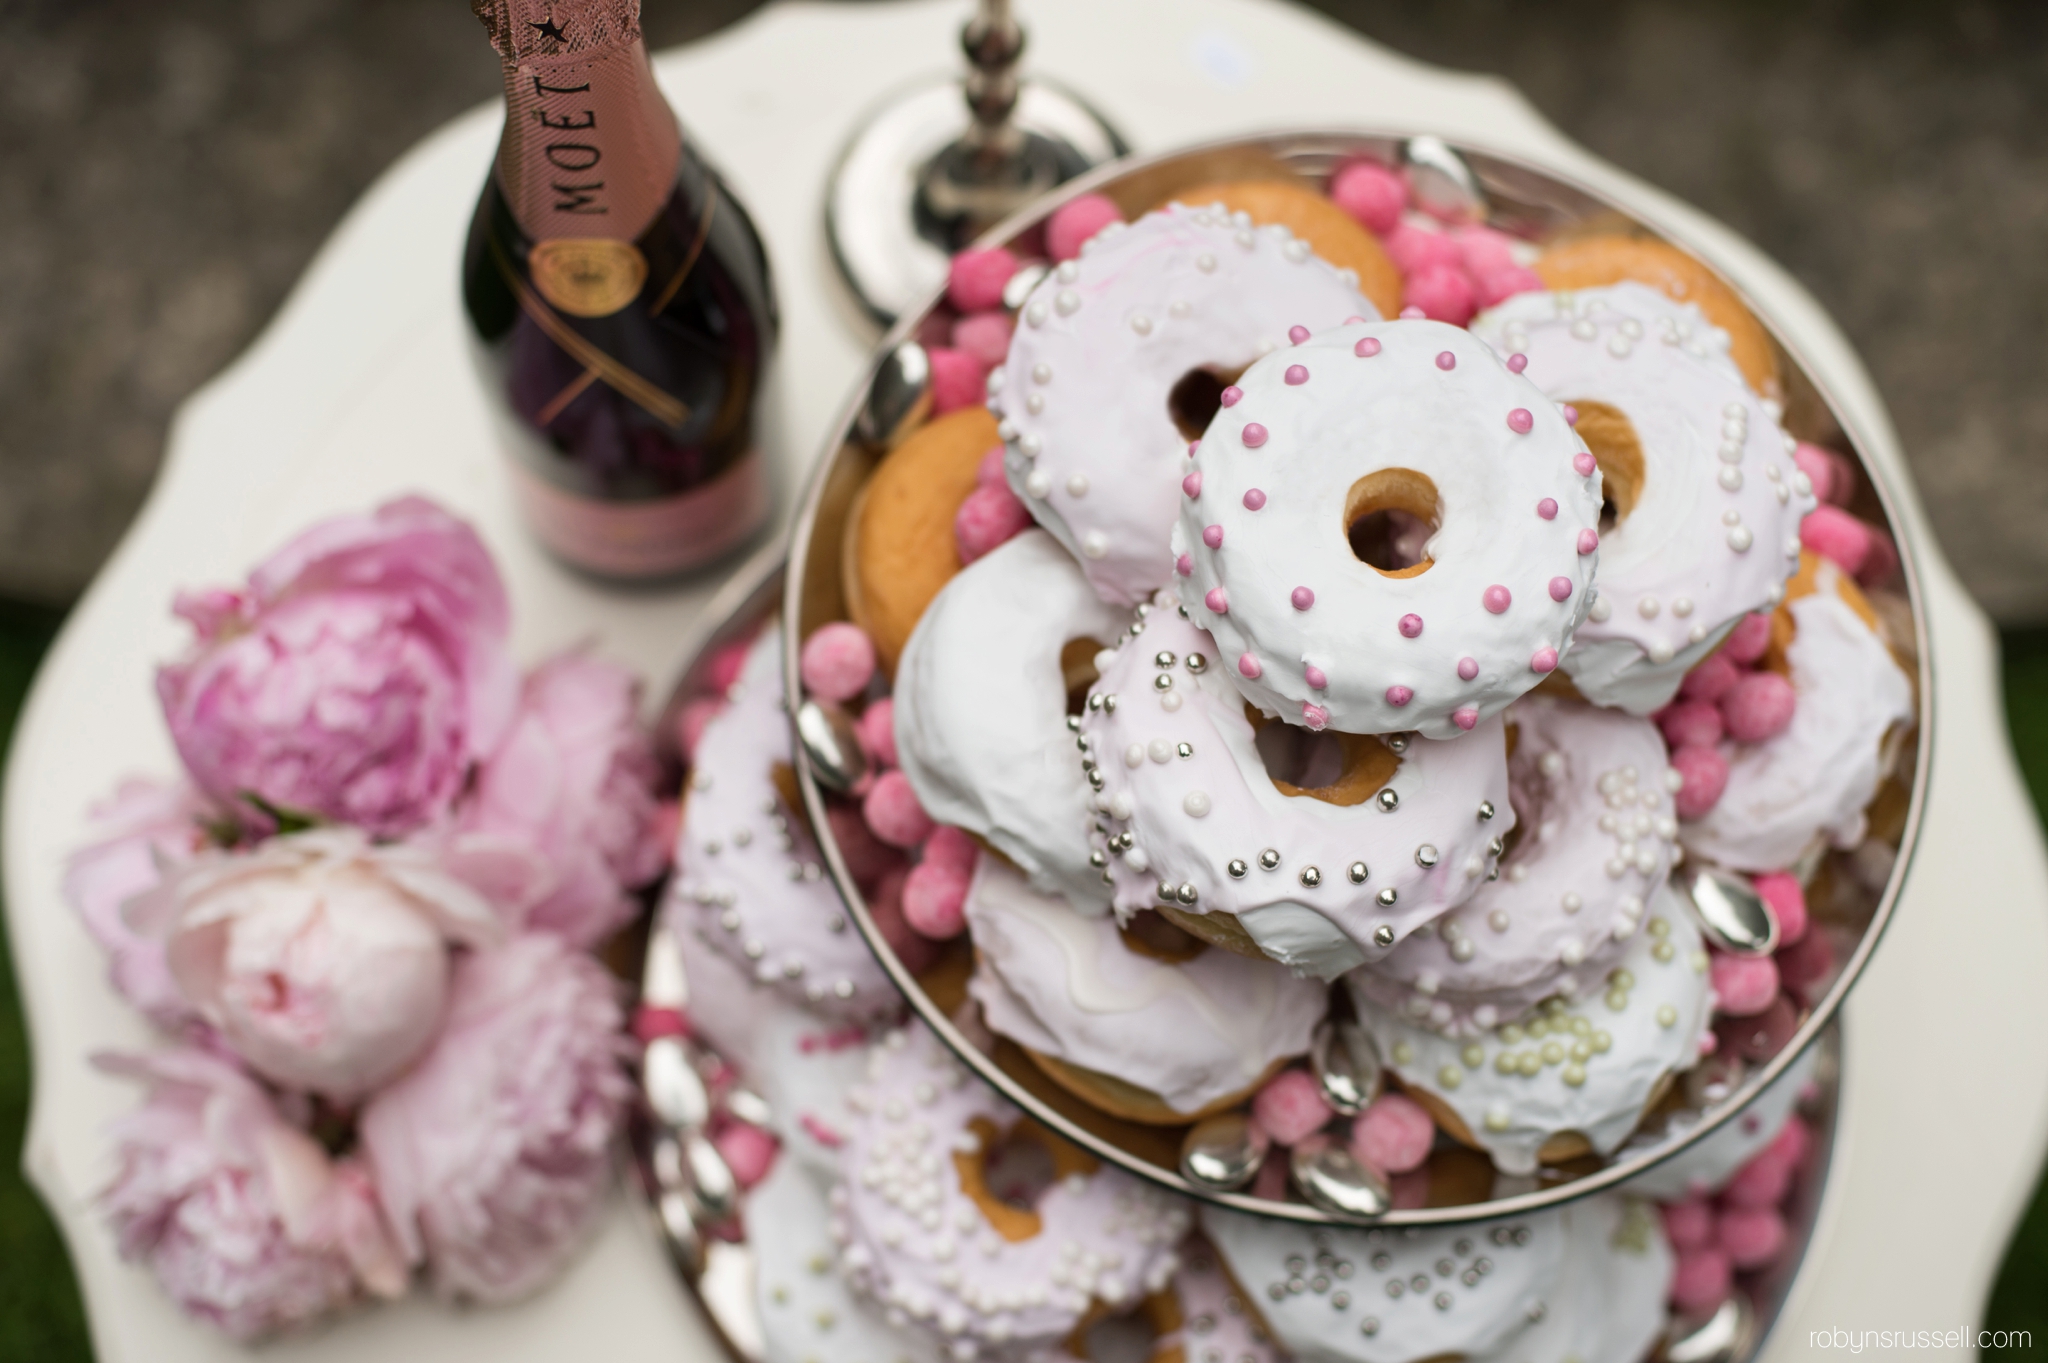 7-donut-cake-wedding-stylized-moet-champagne.jpg